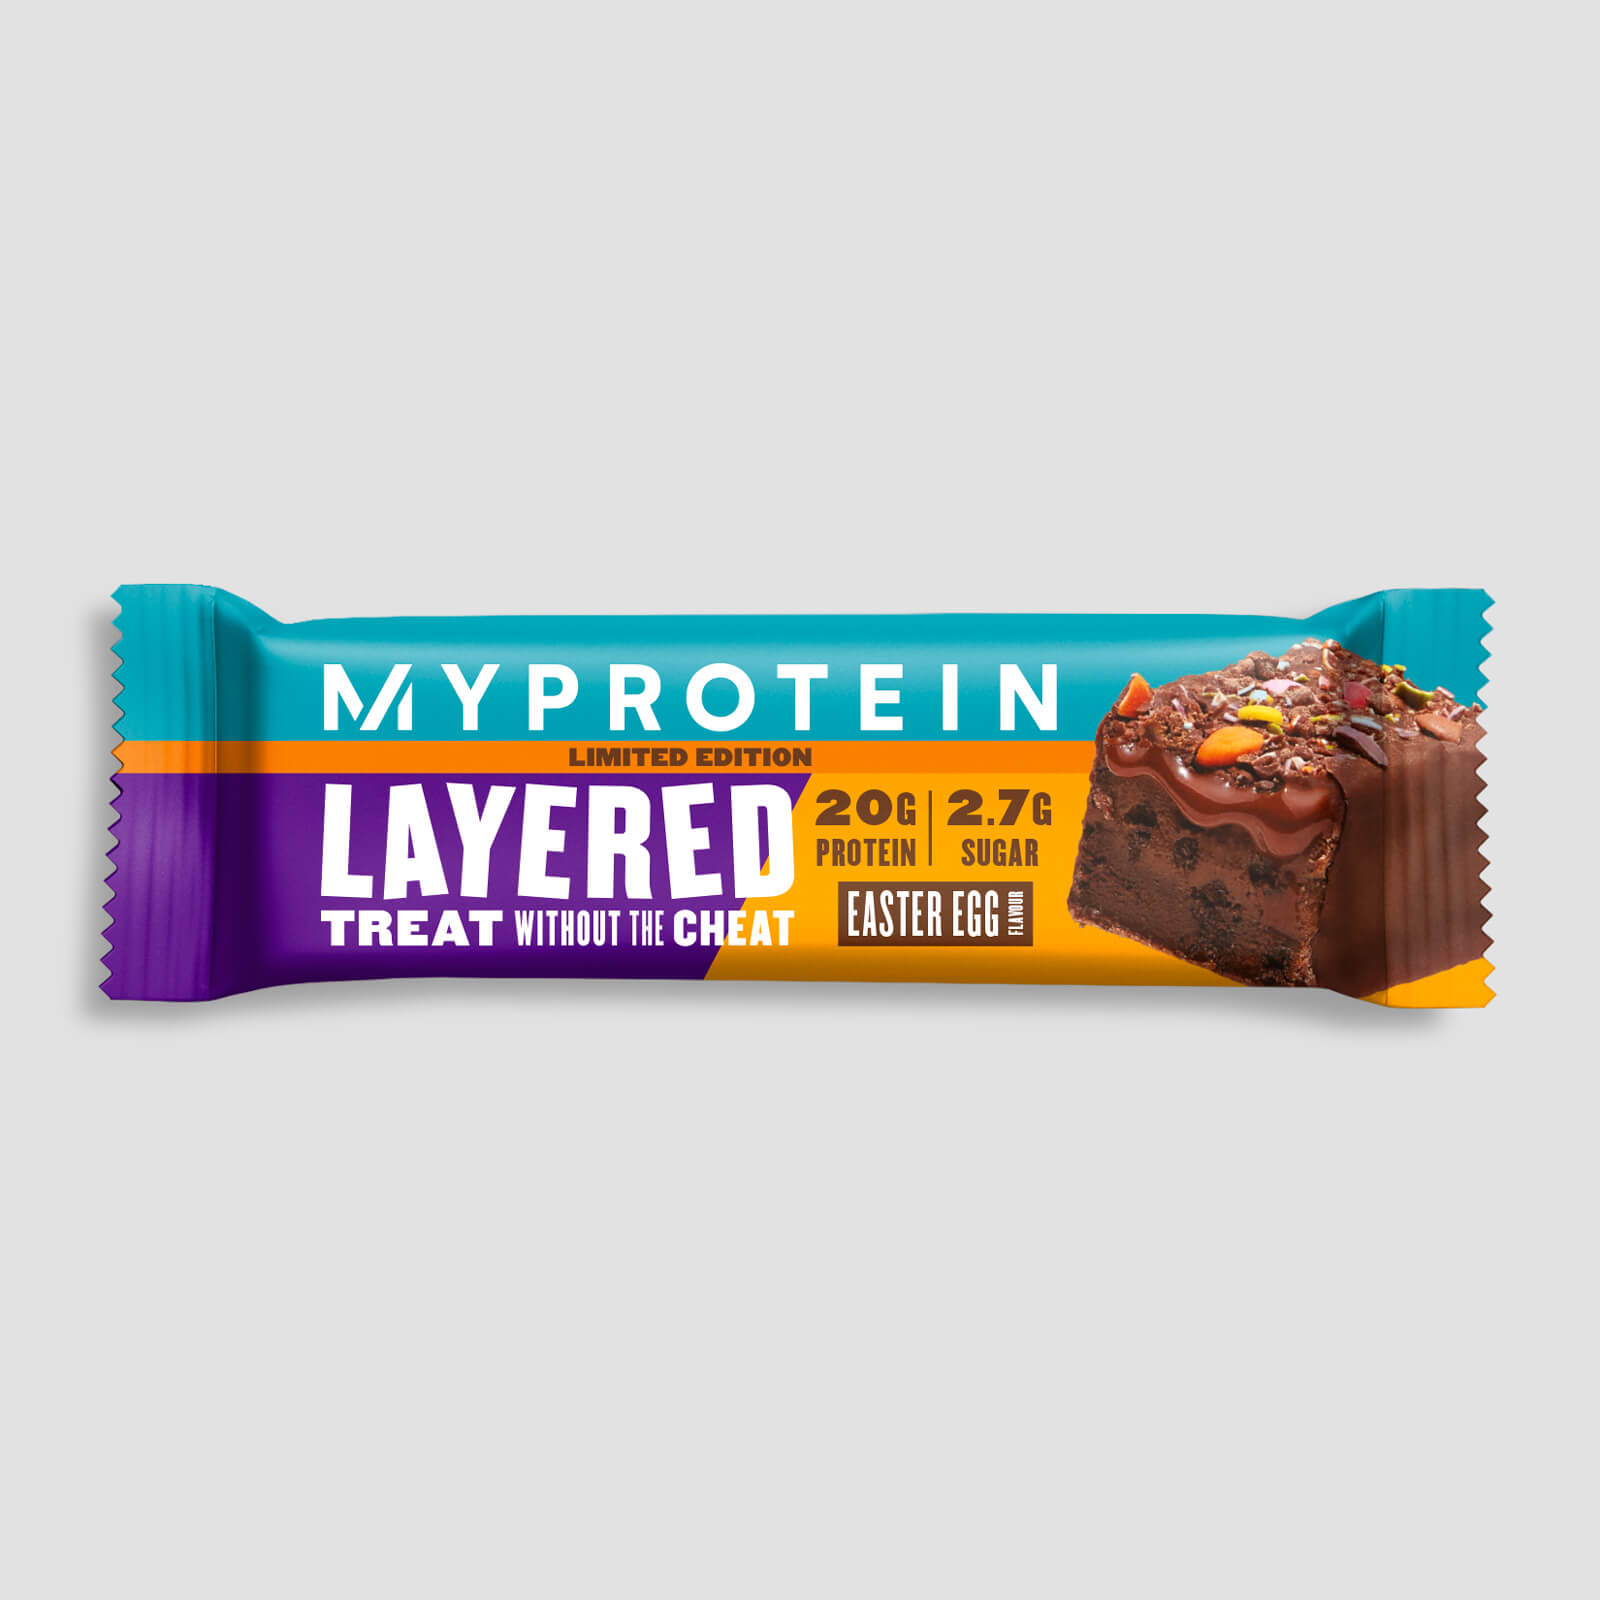 Myprotein Layered Protein Bar (Sample) - Easter Egg Bar